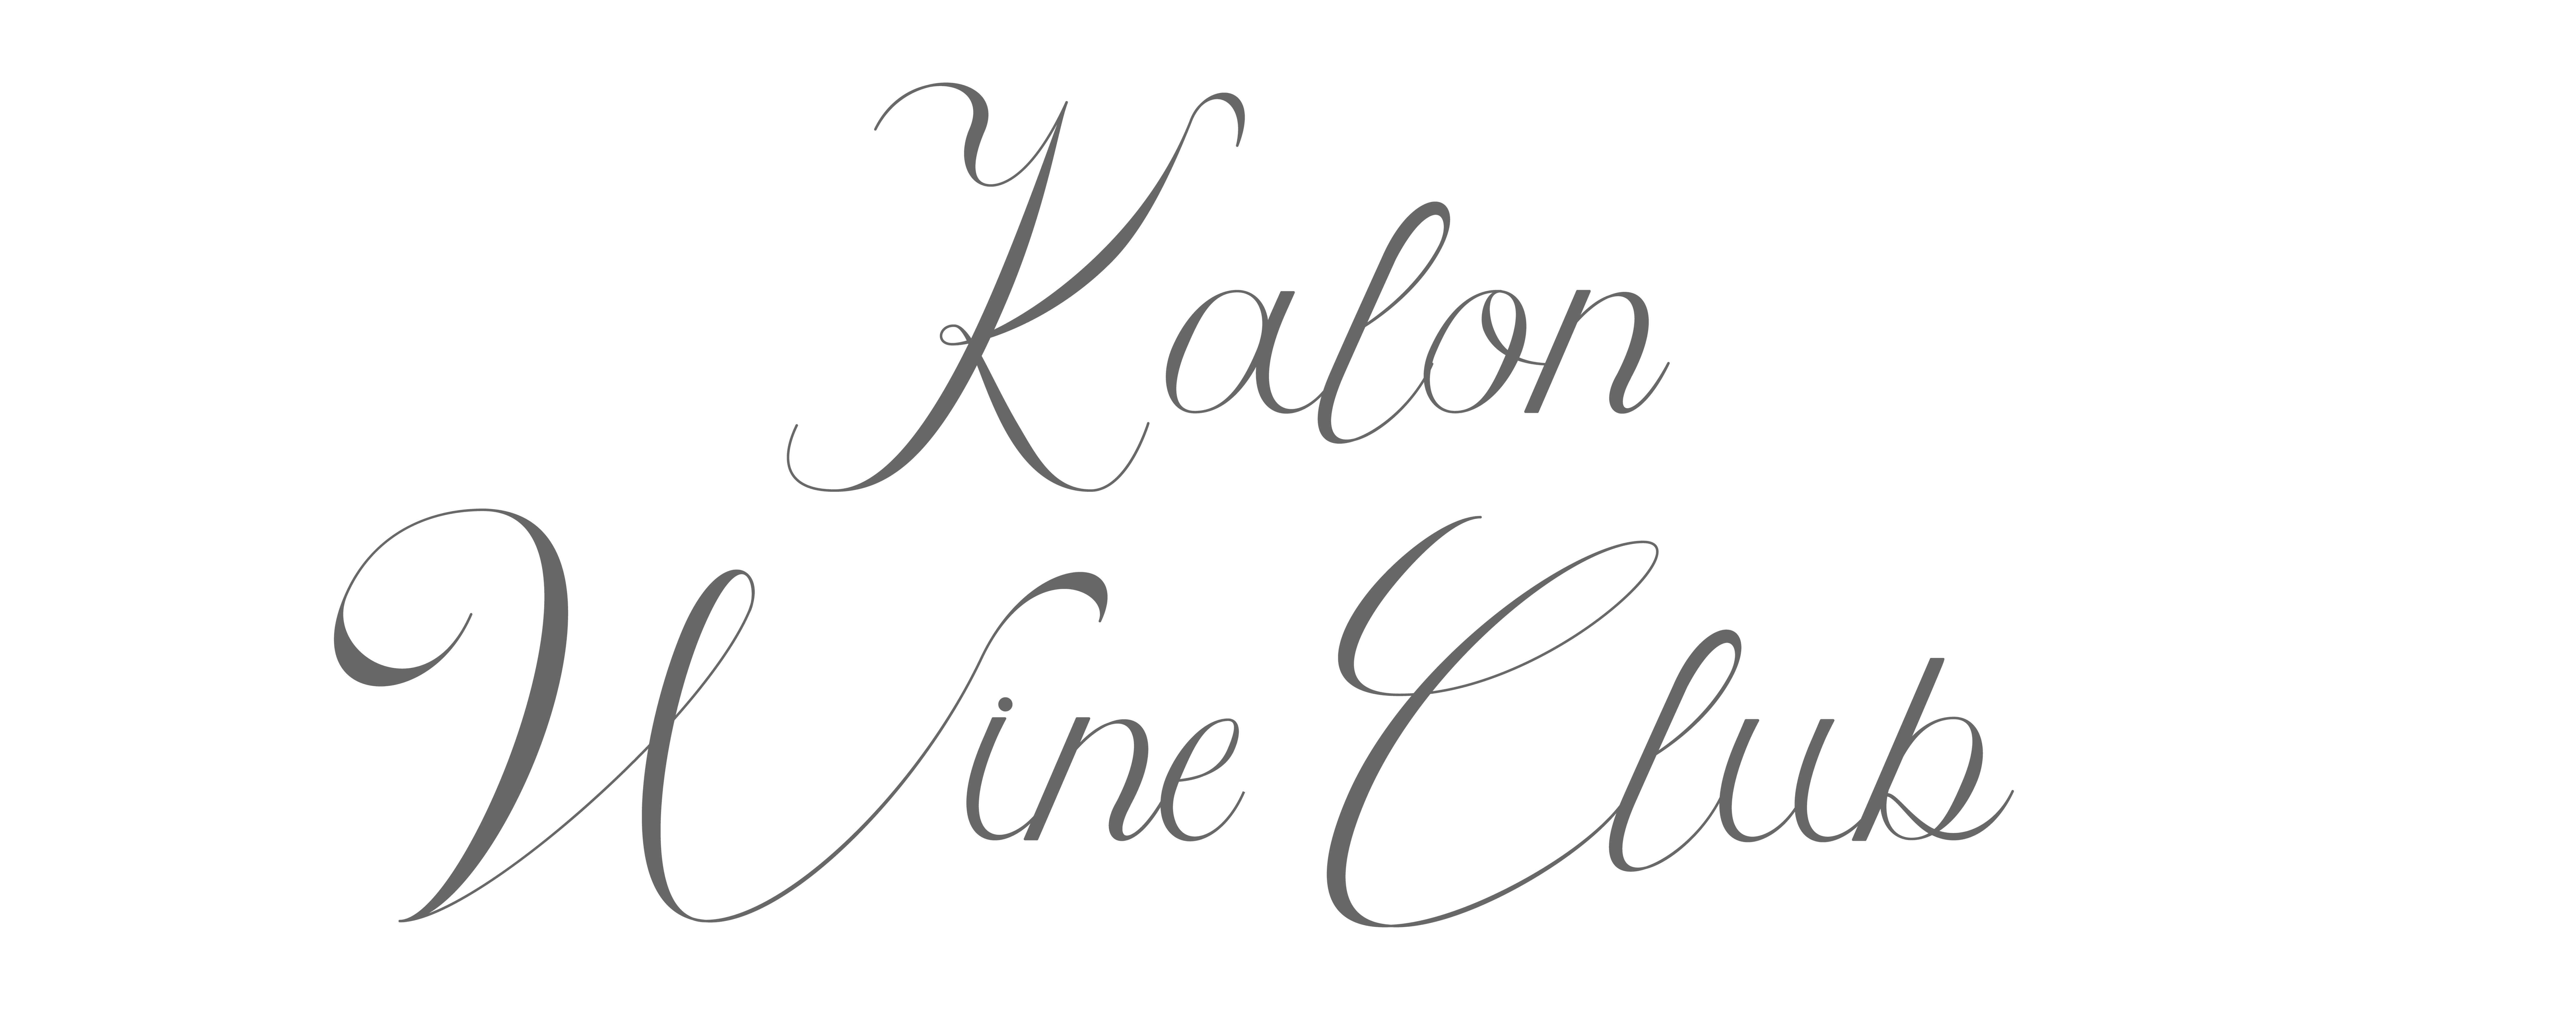 Kalon Wine Club gray wordmark